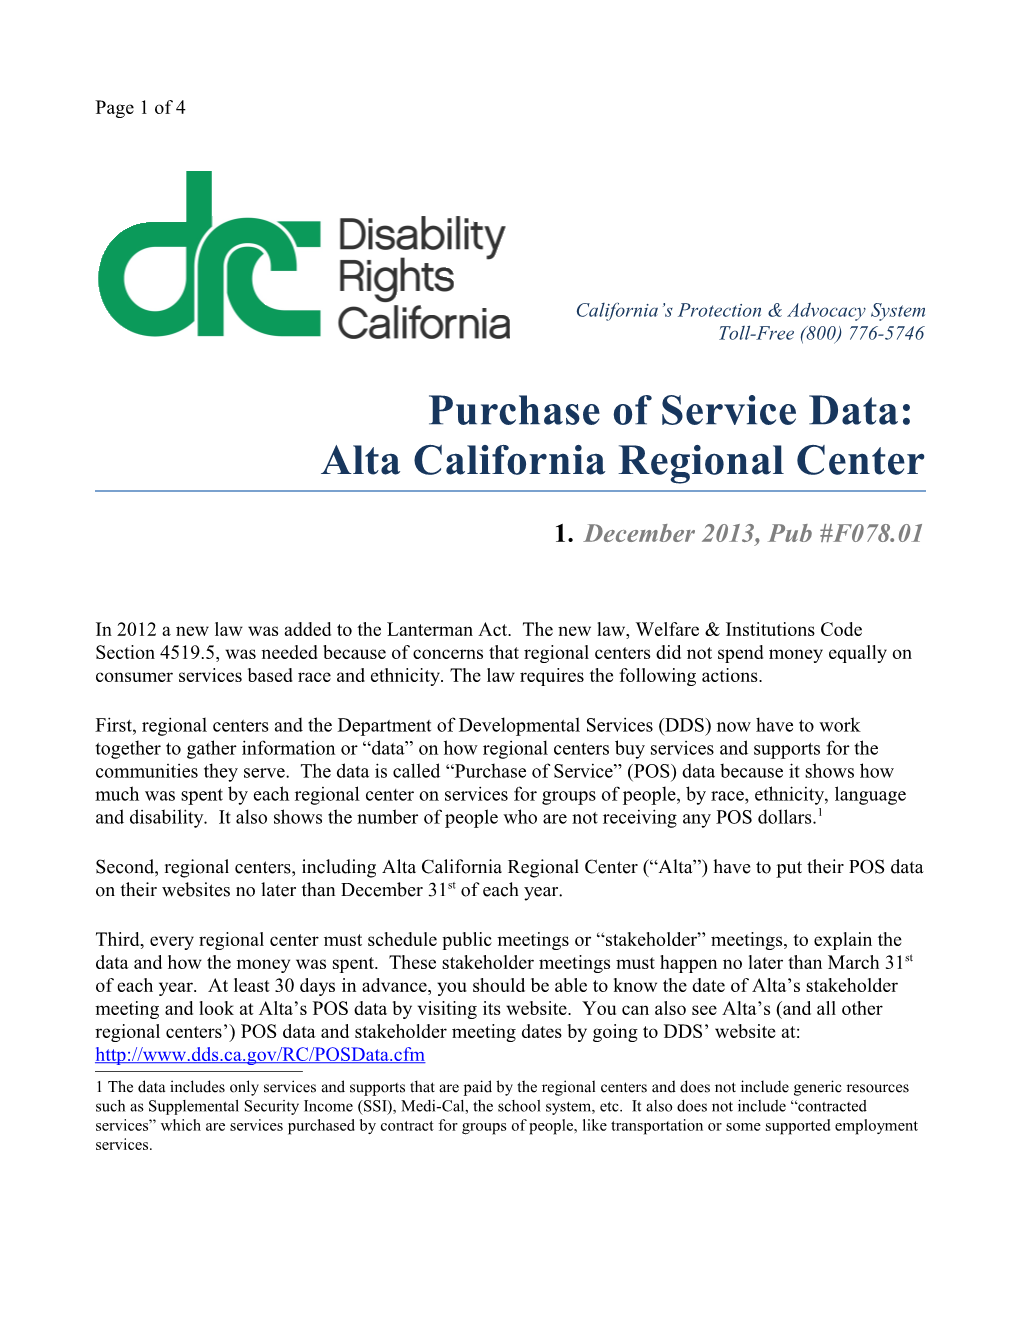 Purchase of Service Data: Alta California Regional Center